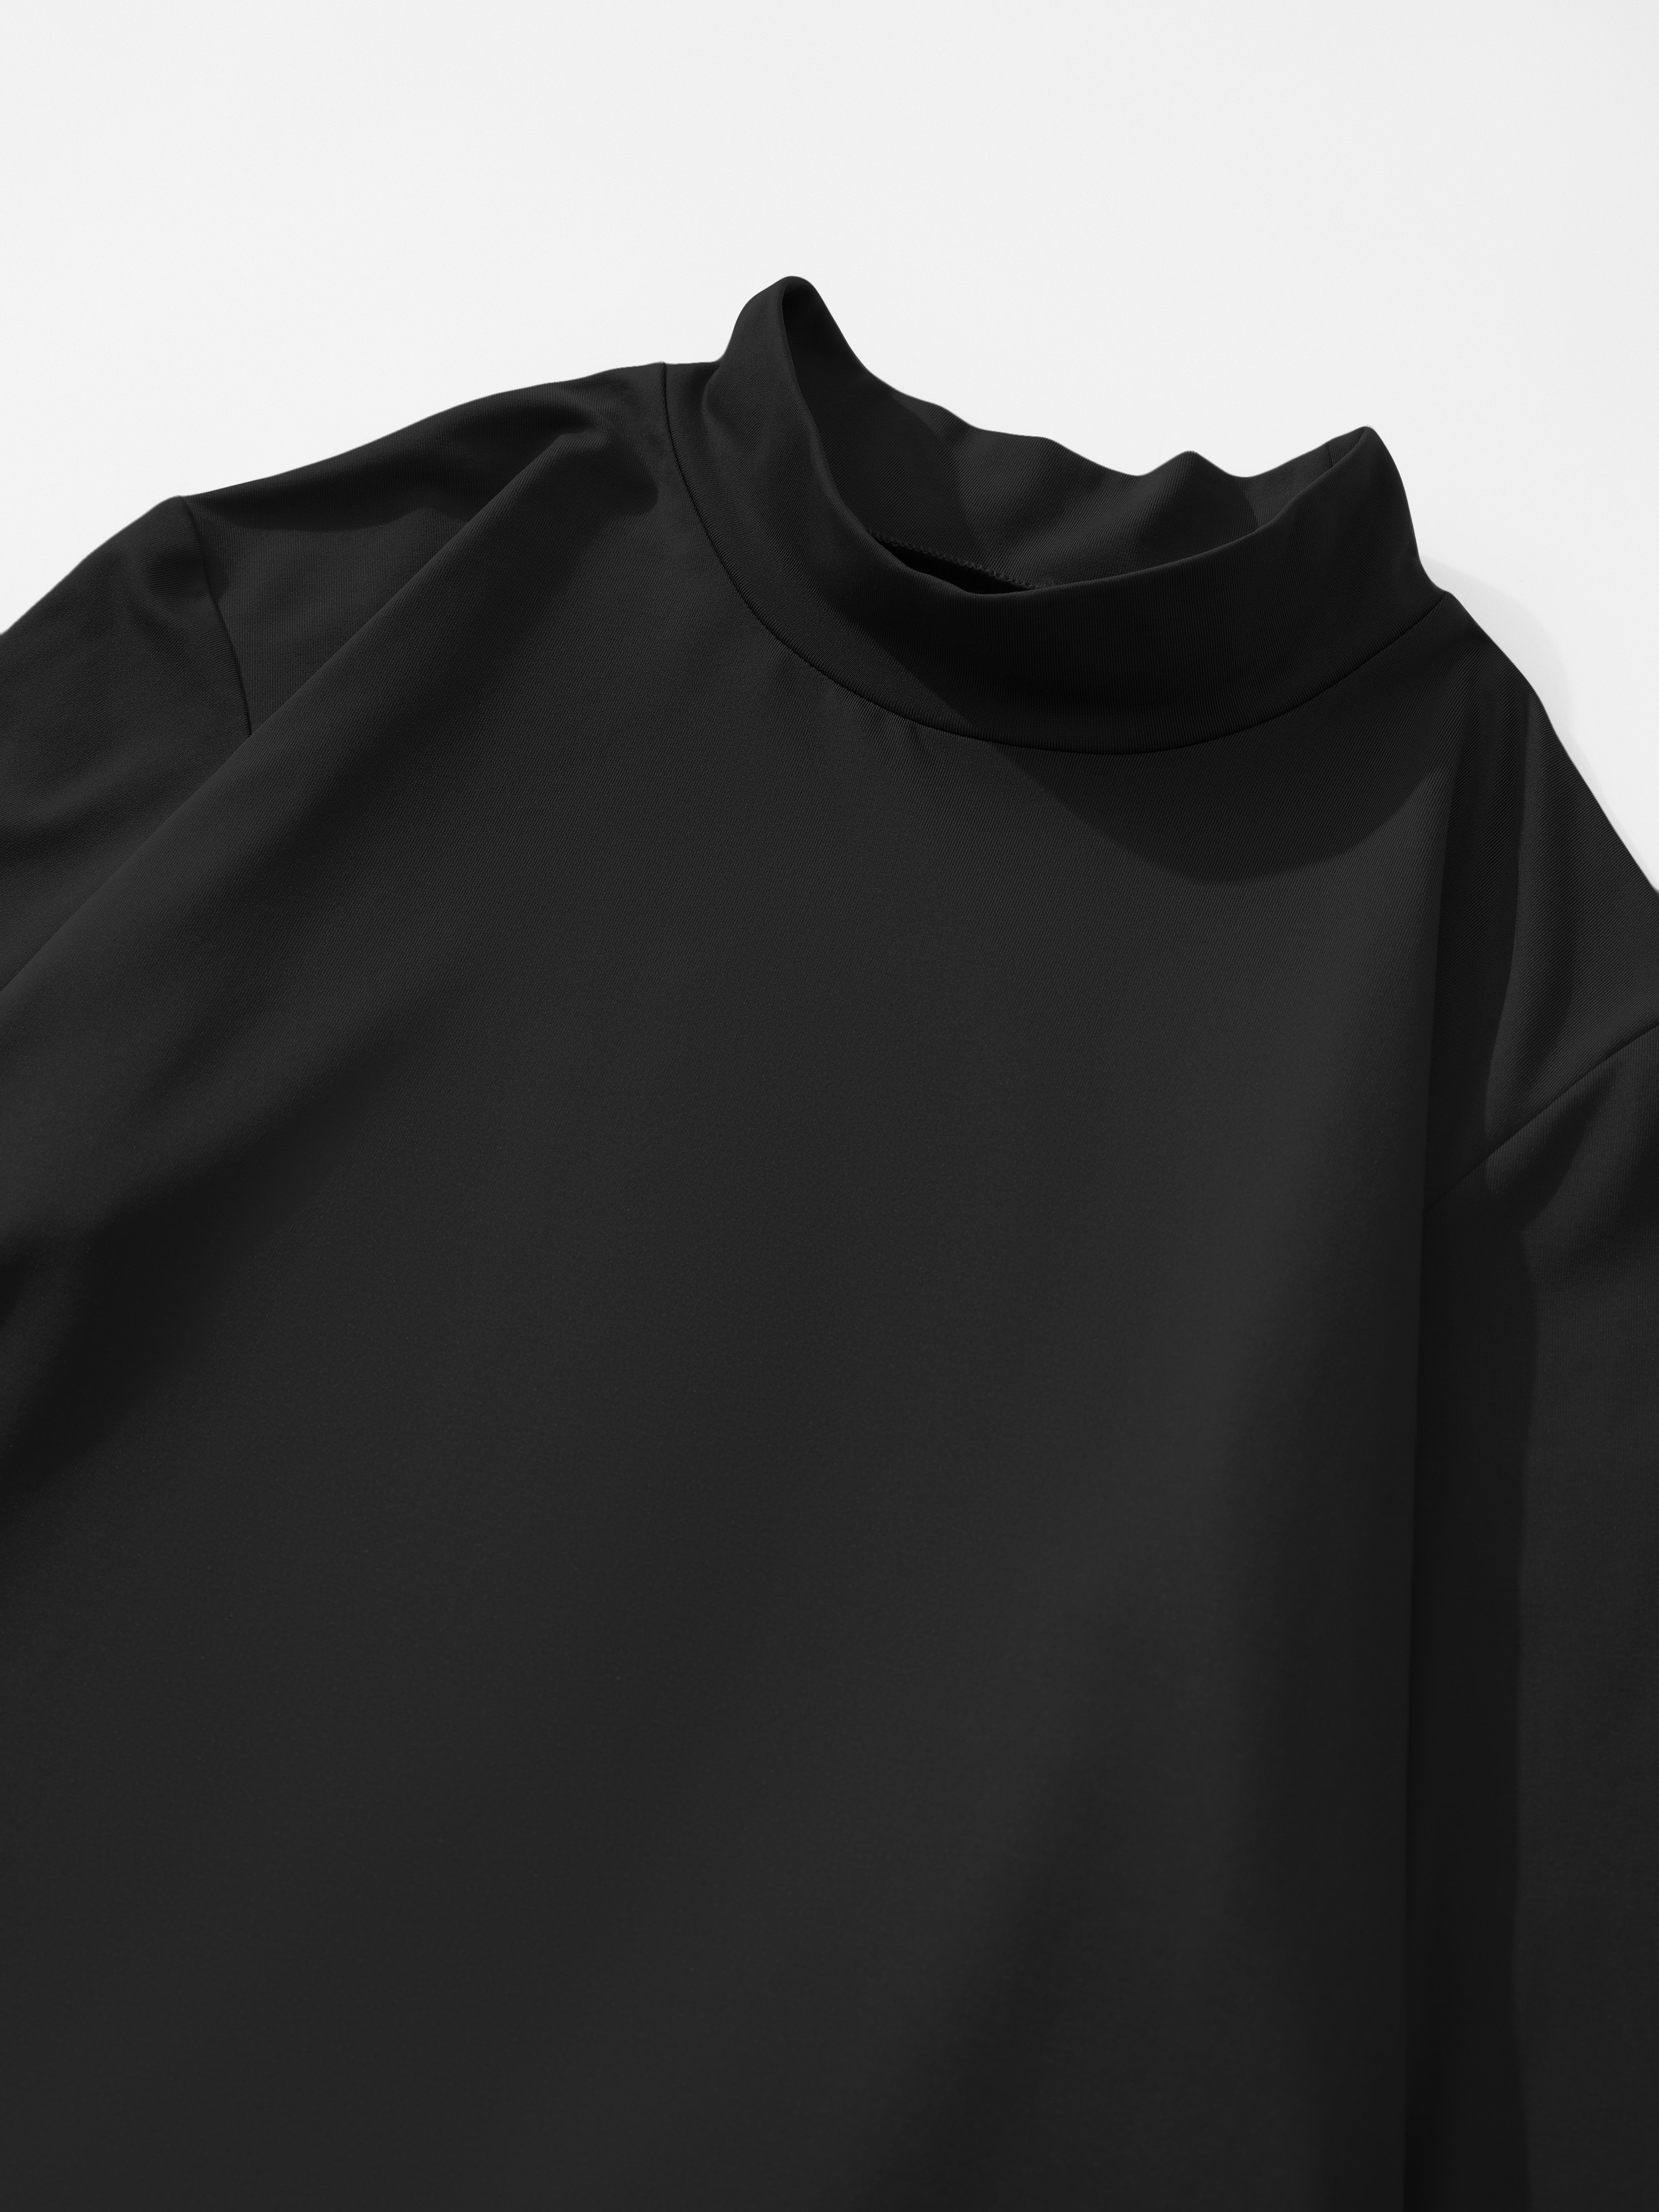 Buy SSLR Womens Thermal Turtleneck T-Shirt Slim Fit Long Sleeve Basic Tops  Mock Neck Baselayer, Black, Small at